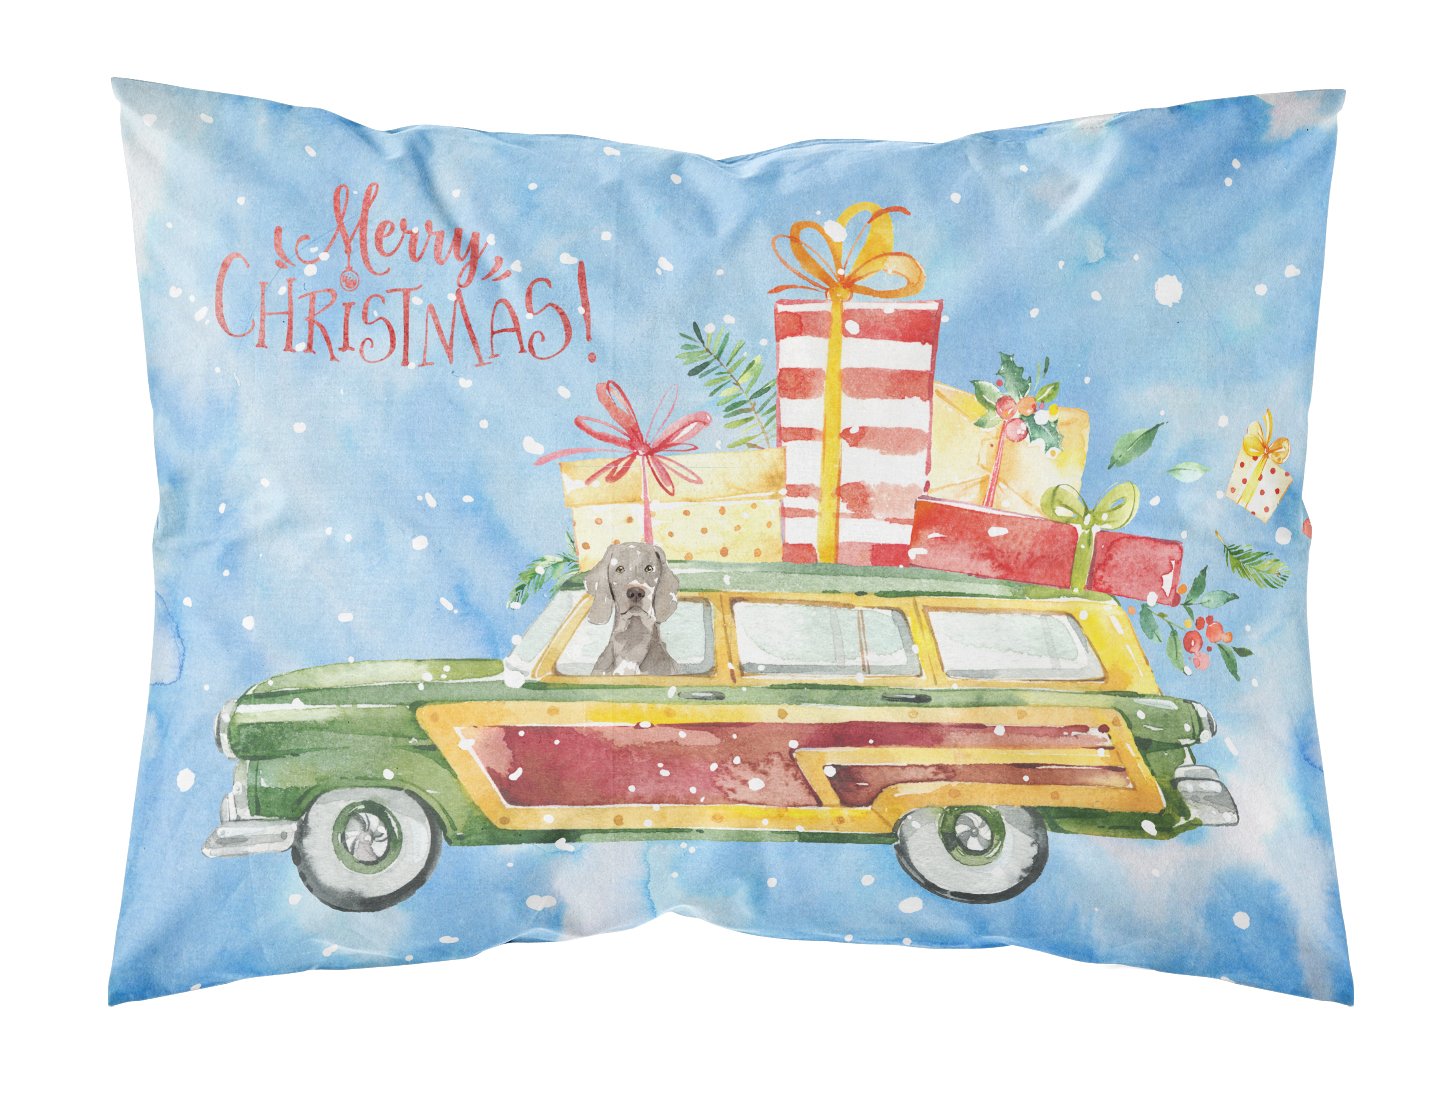 Merry Christmas Weimaraner Fabric Standard Pillowcase CK2426PILLOWCASE by Caroline's Treasures